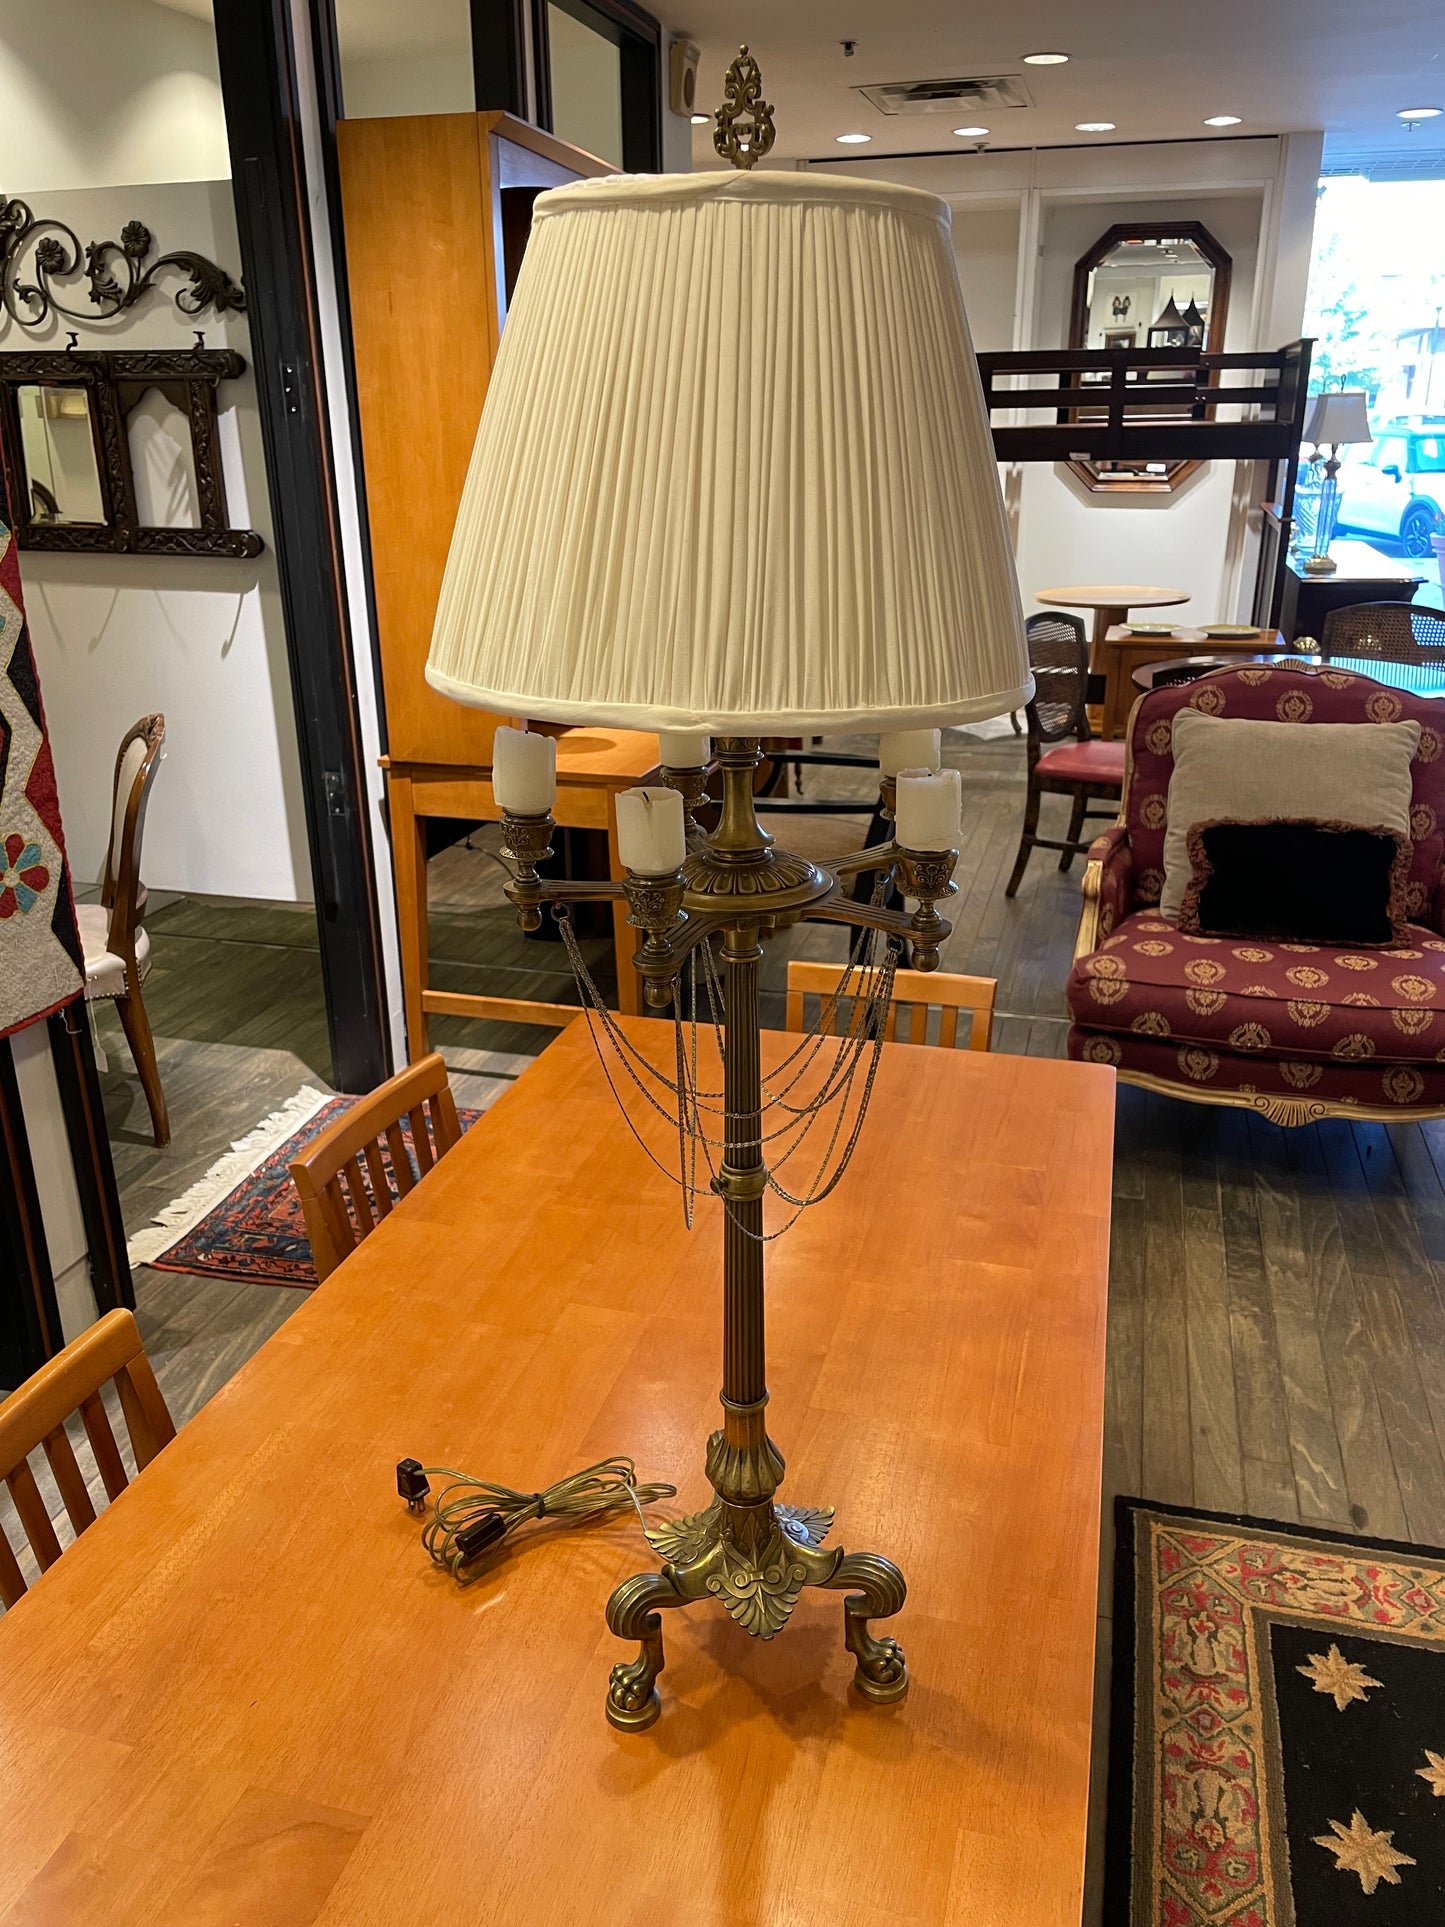 French Empire Candelabra Lamp